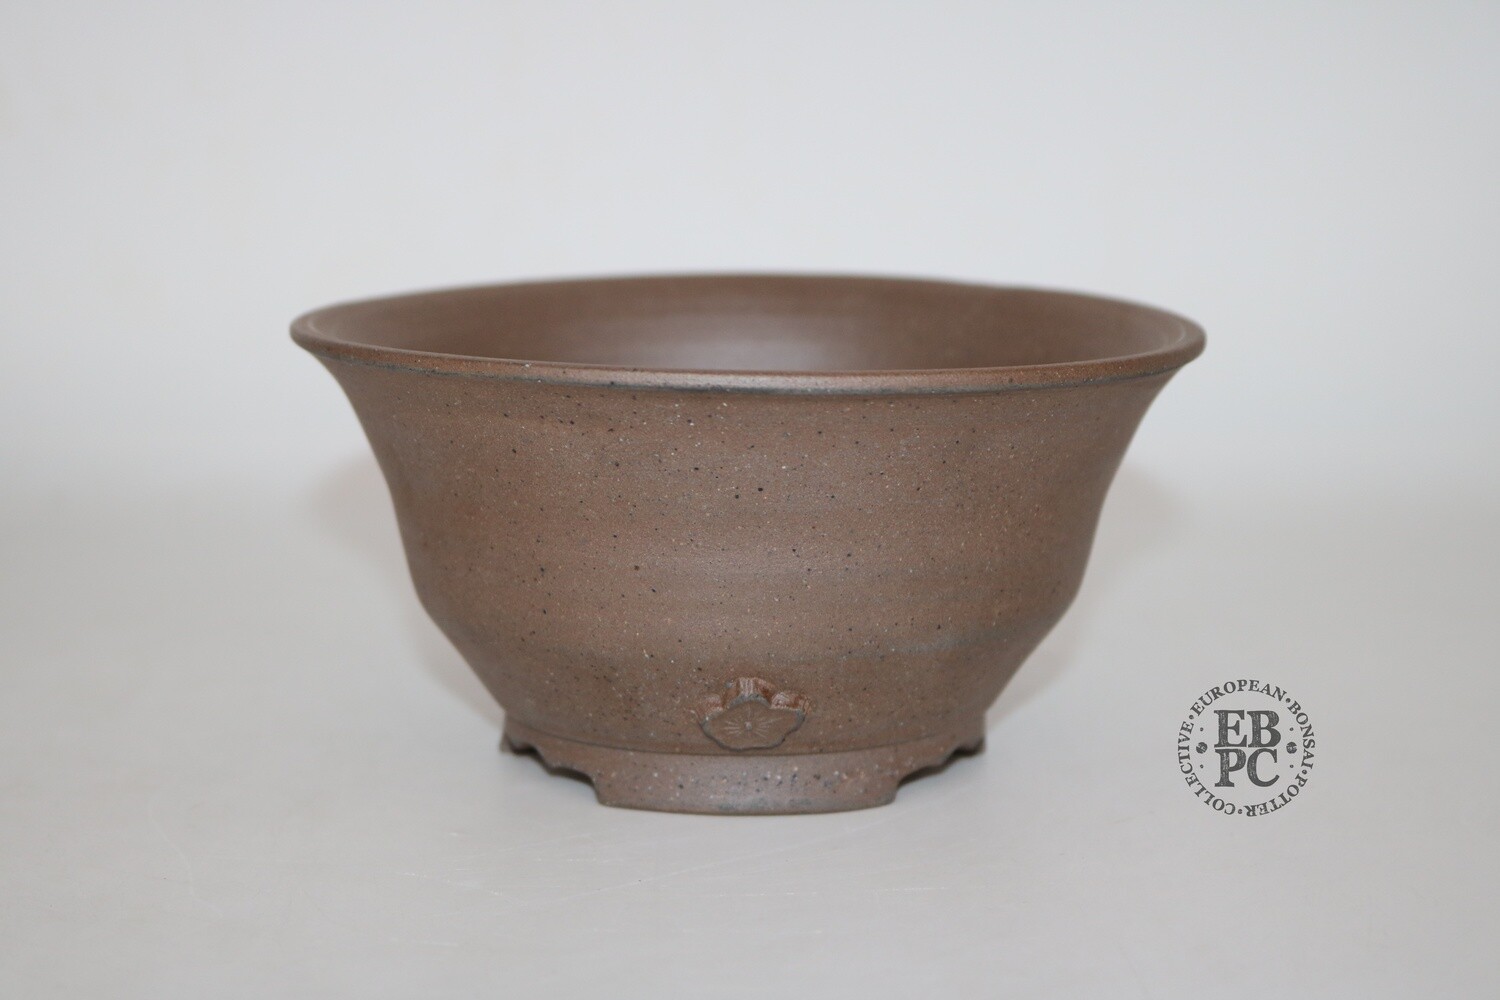 SOLD - Amdouni Bonsai Pots - 14.3cm; Unglazed; Round; Shohin; Flower Motif in Relief; Sami Amdouni